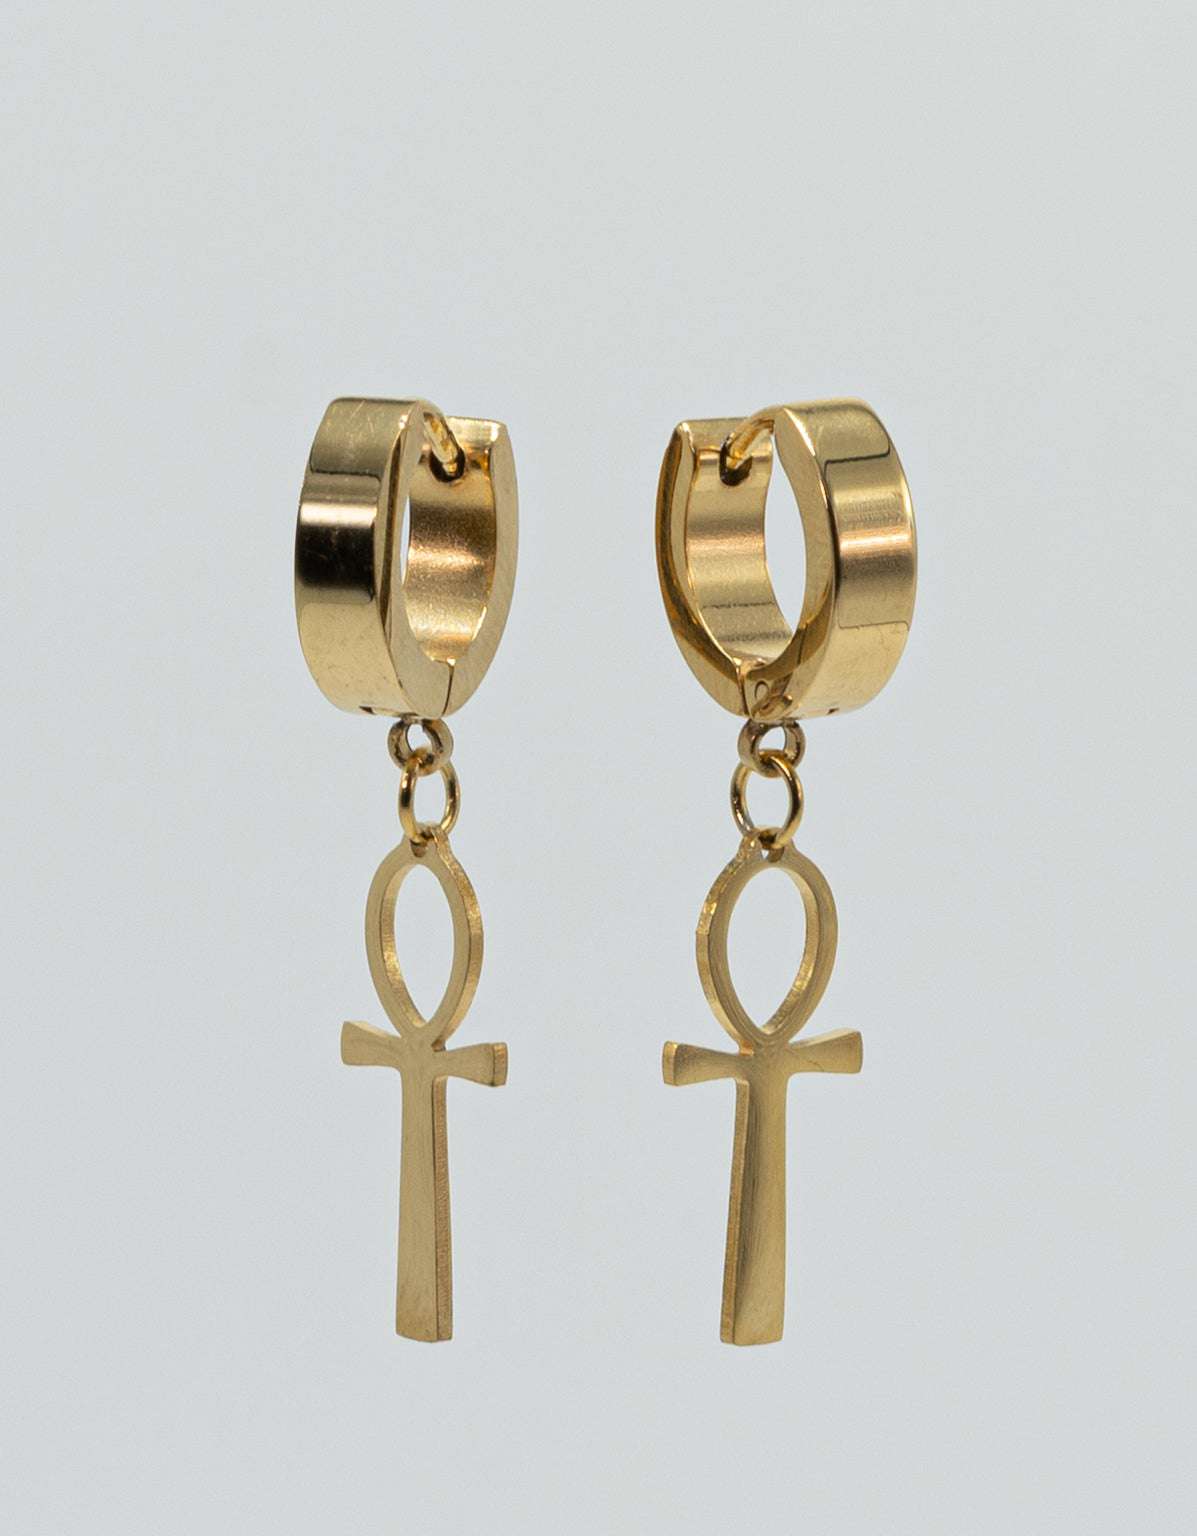 Stylish Ankh Earrings for Men and Women - ClassicsJewelryGifts